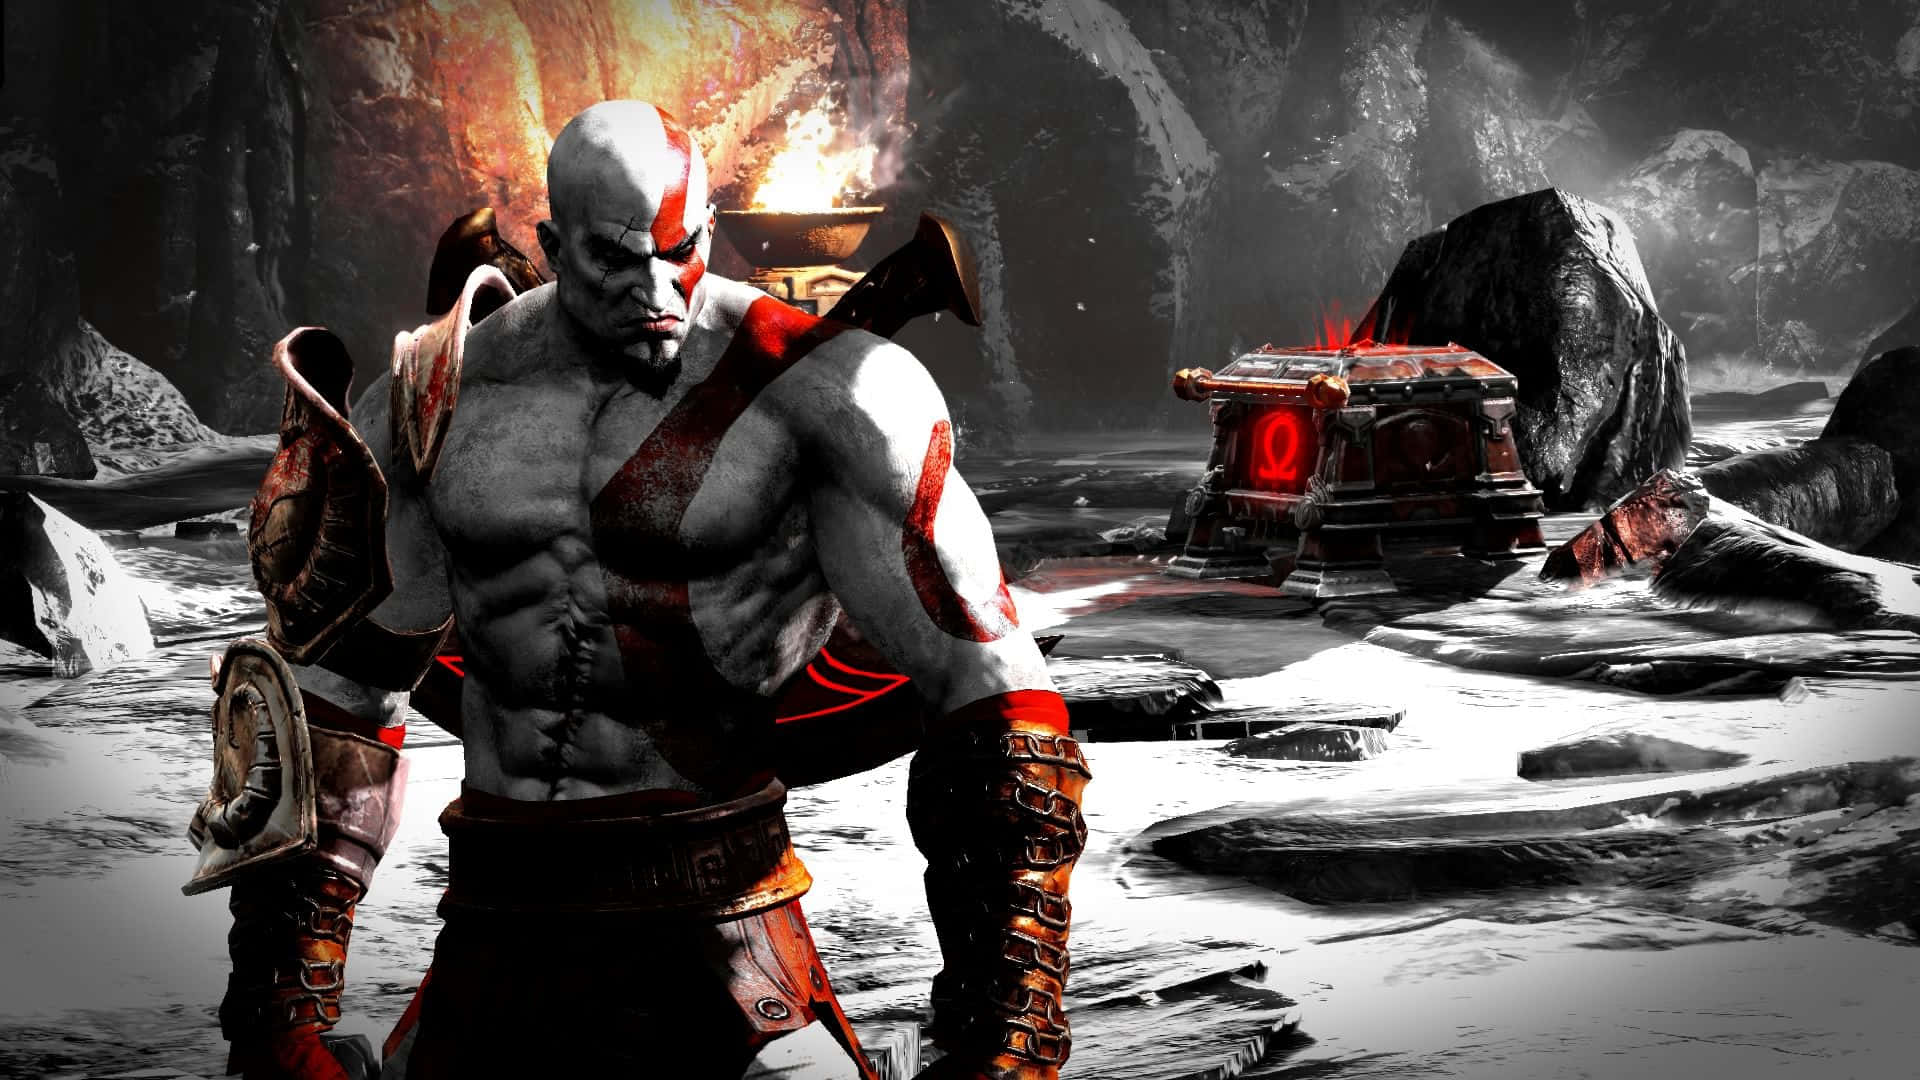 Kratos unleashes his fury in God of War III. Wallpaper